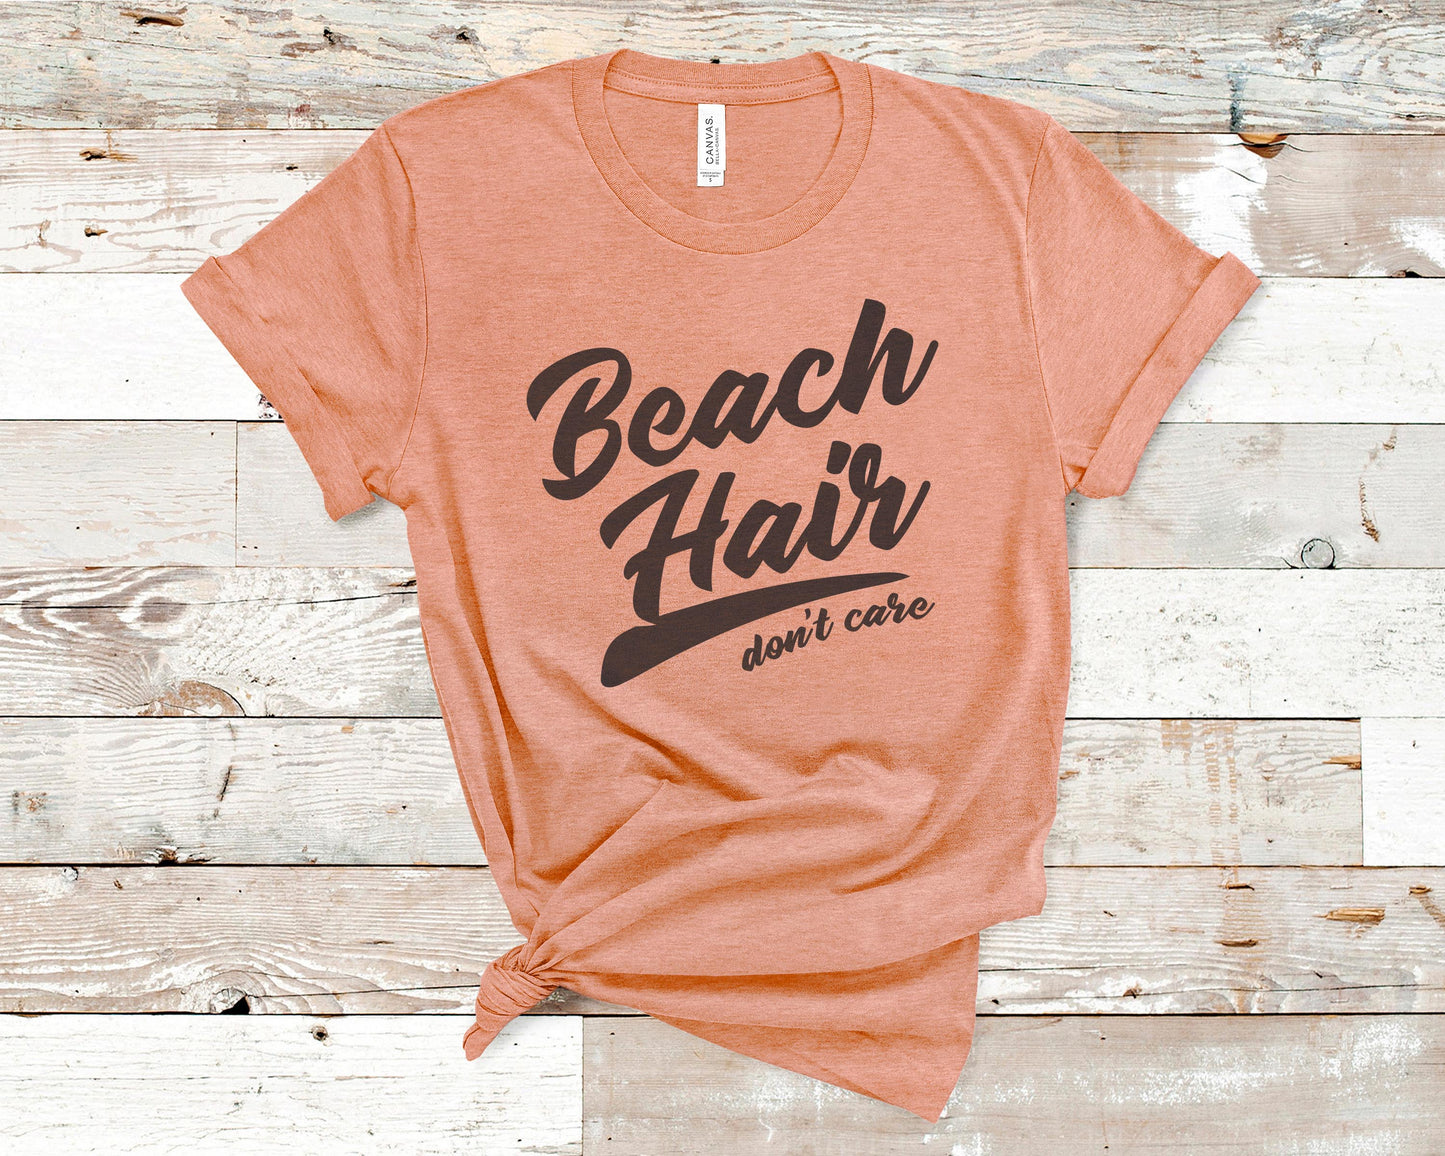 Beach Hair Don't Care - Travel/Vacation